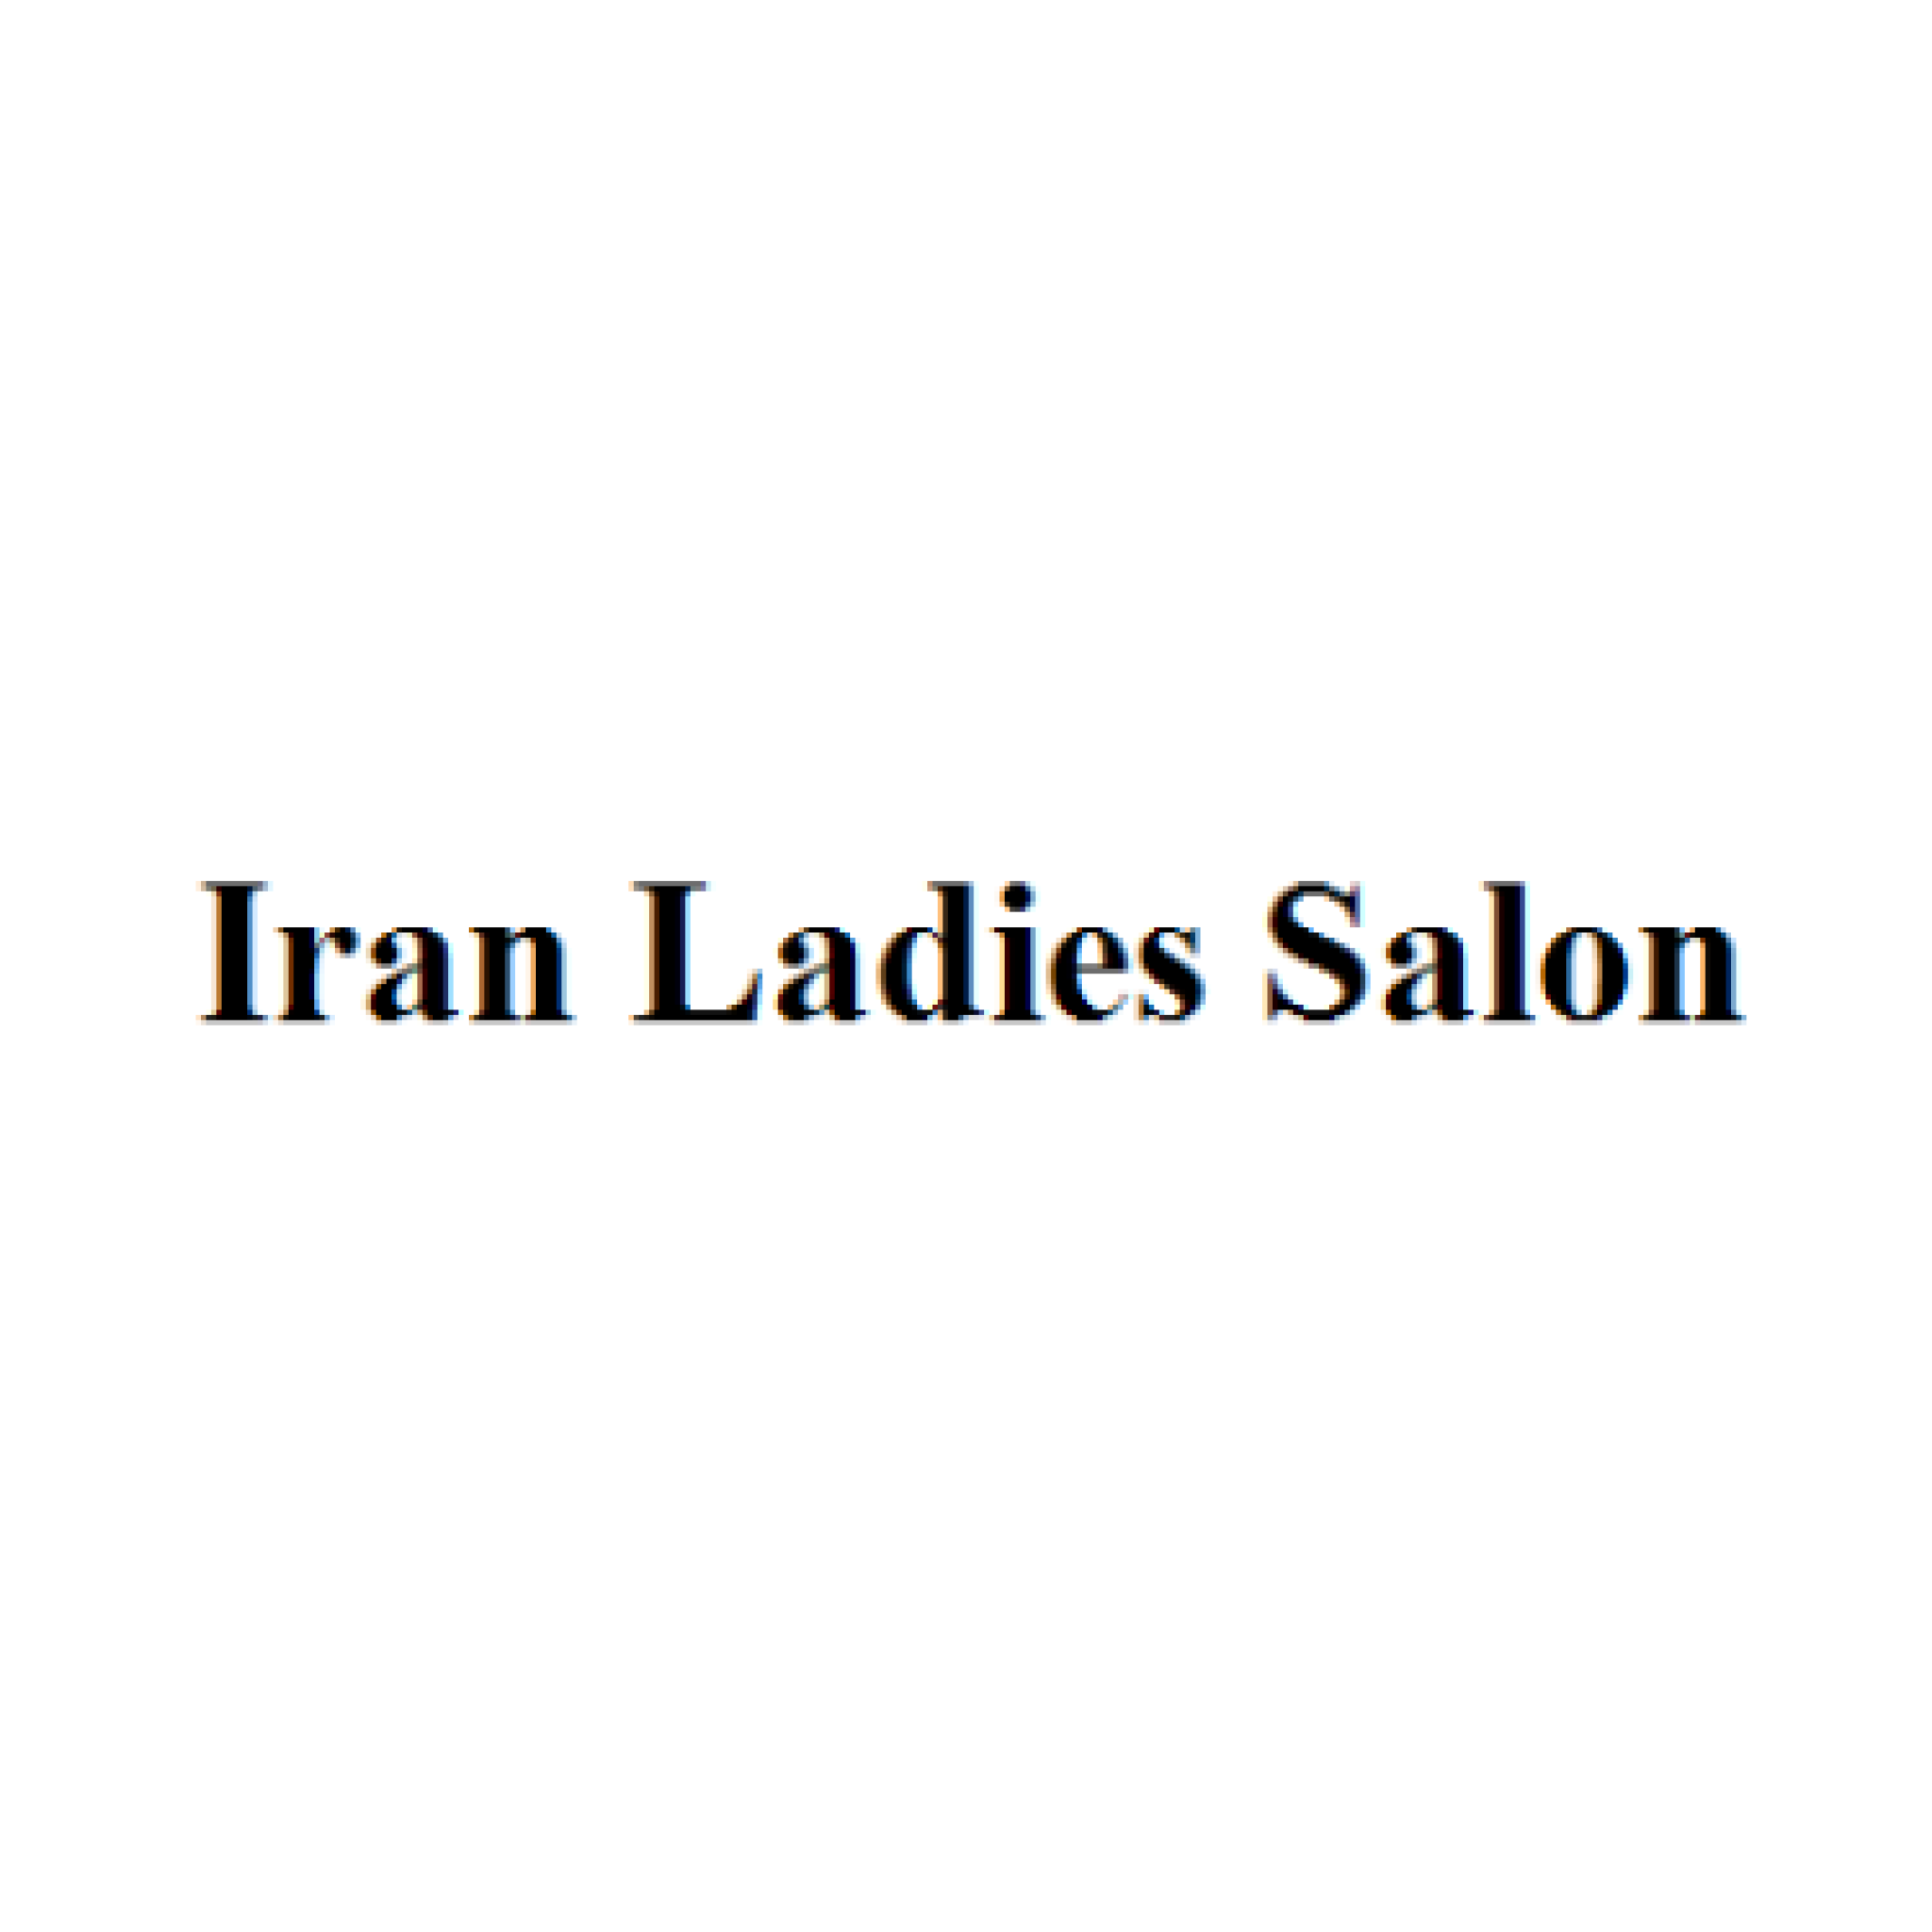 Iran Ladies Salon